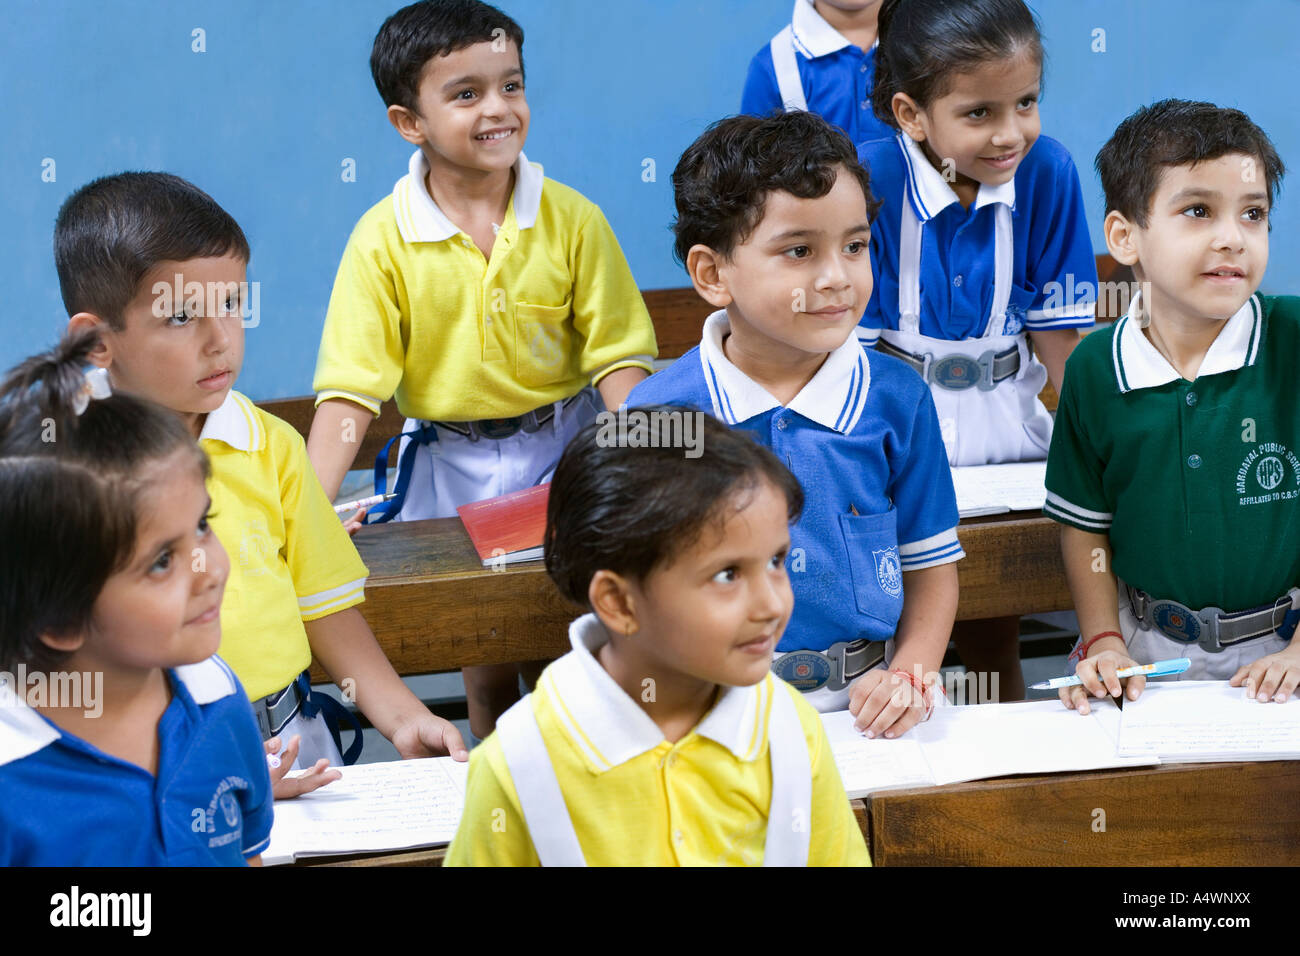 Children standing at desks in classroom Stock Photo